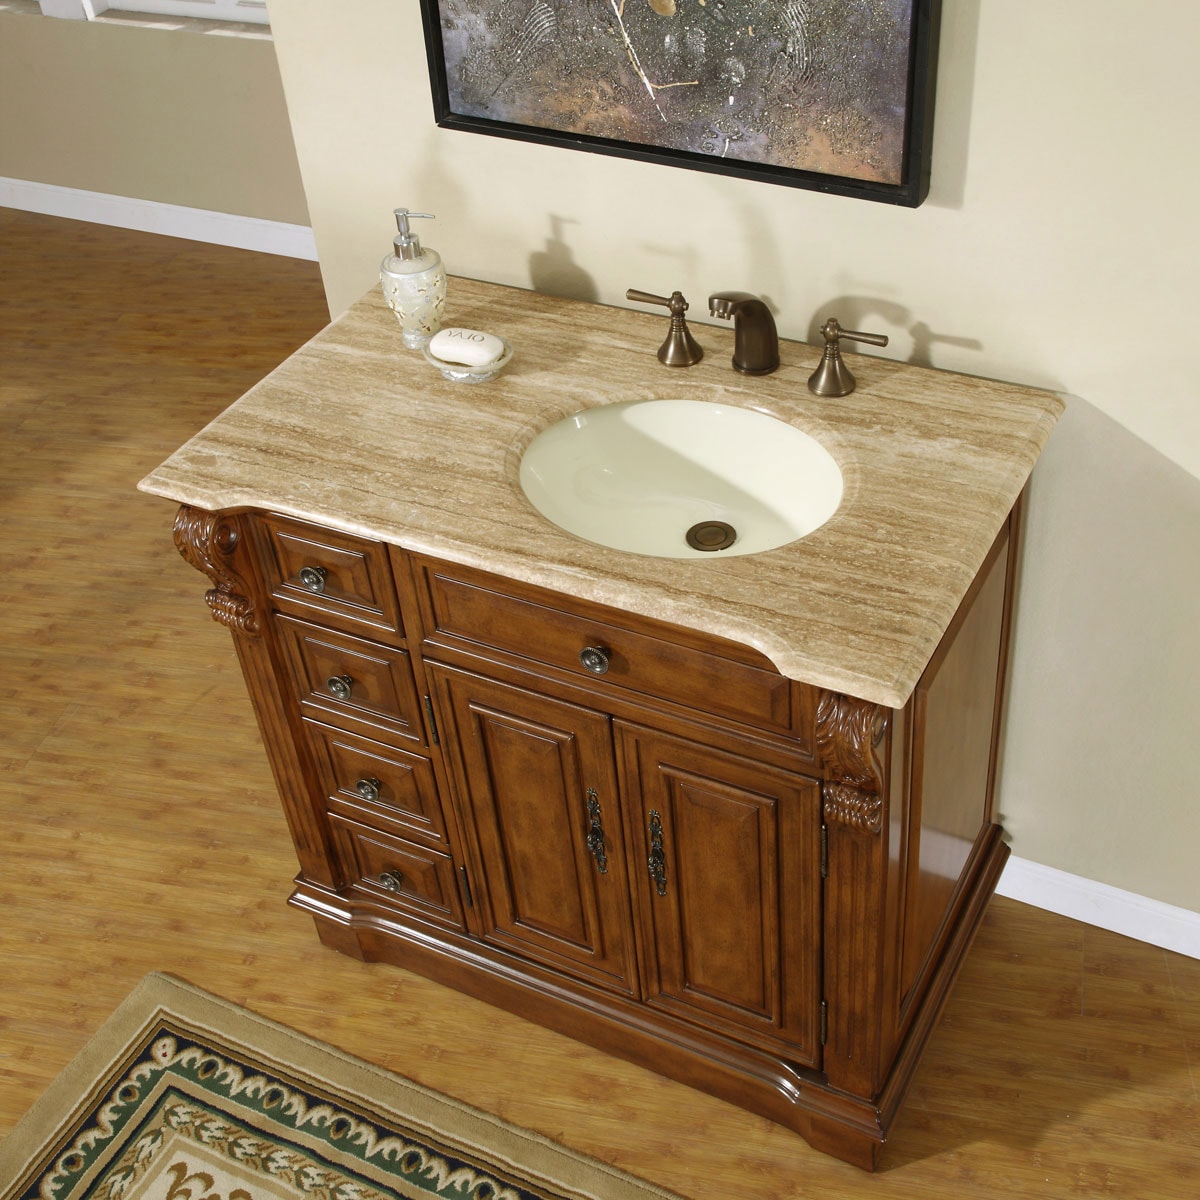 38-in Walnut Undermount Single Sink Bathroom Vanity with Travertine Top in Brown | - Silkroad Exclusive HYP-0904-T-UIC-38-R